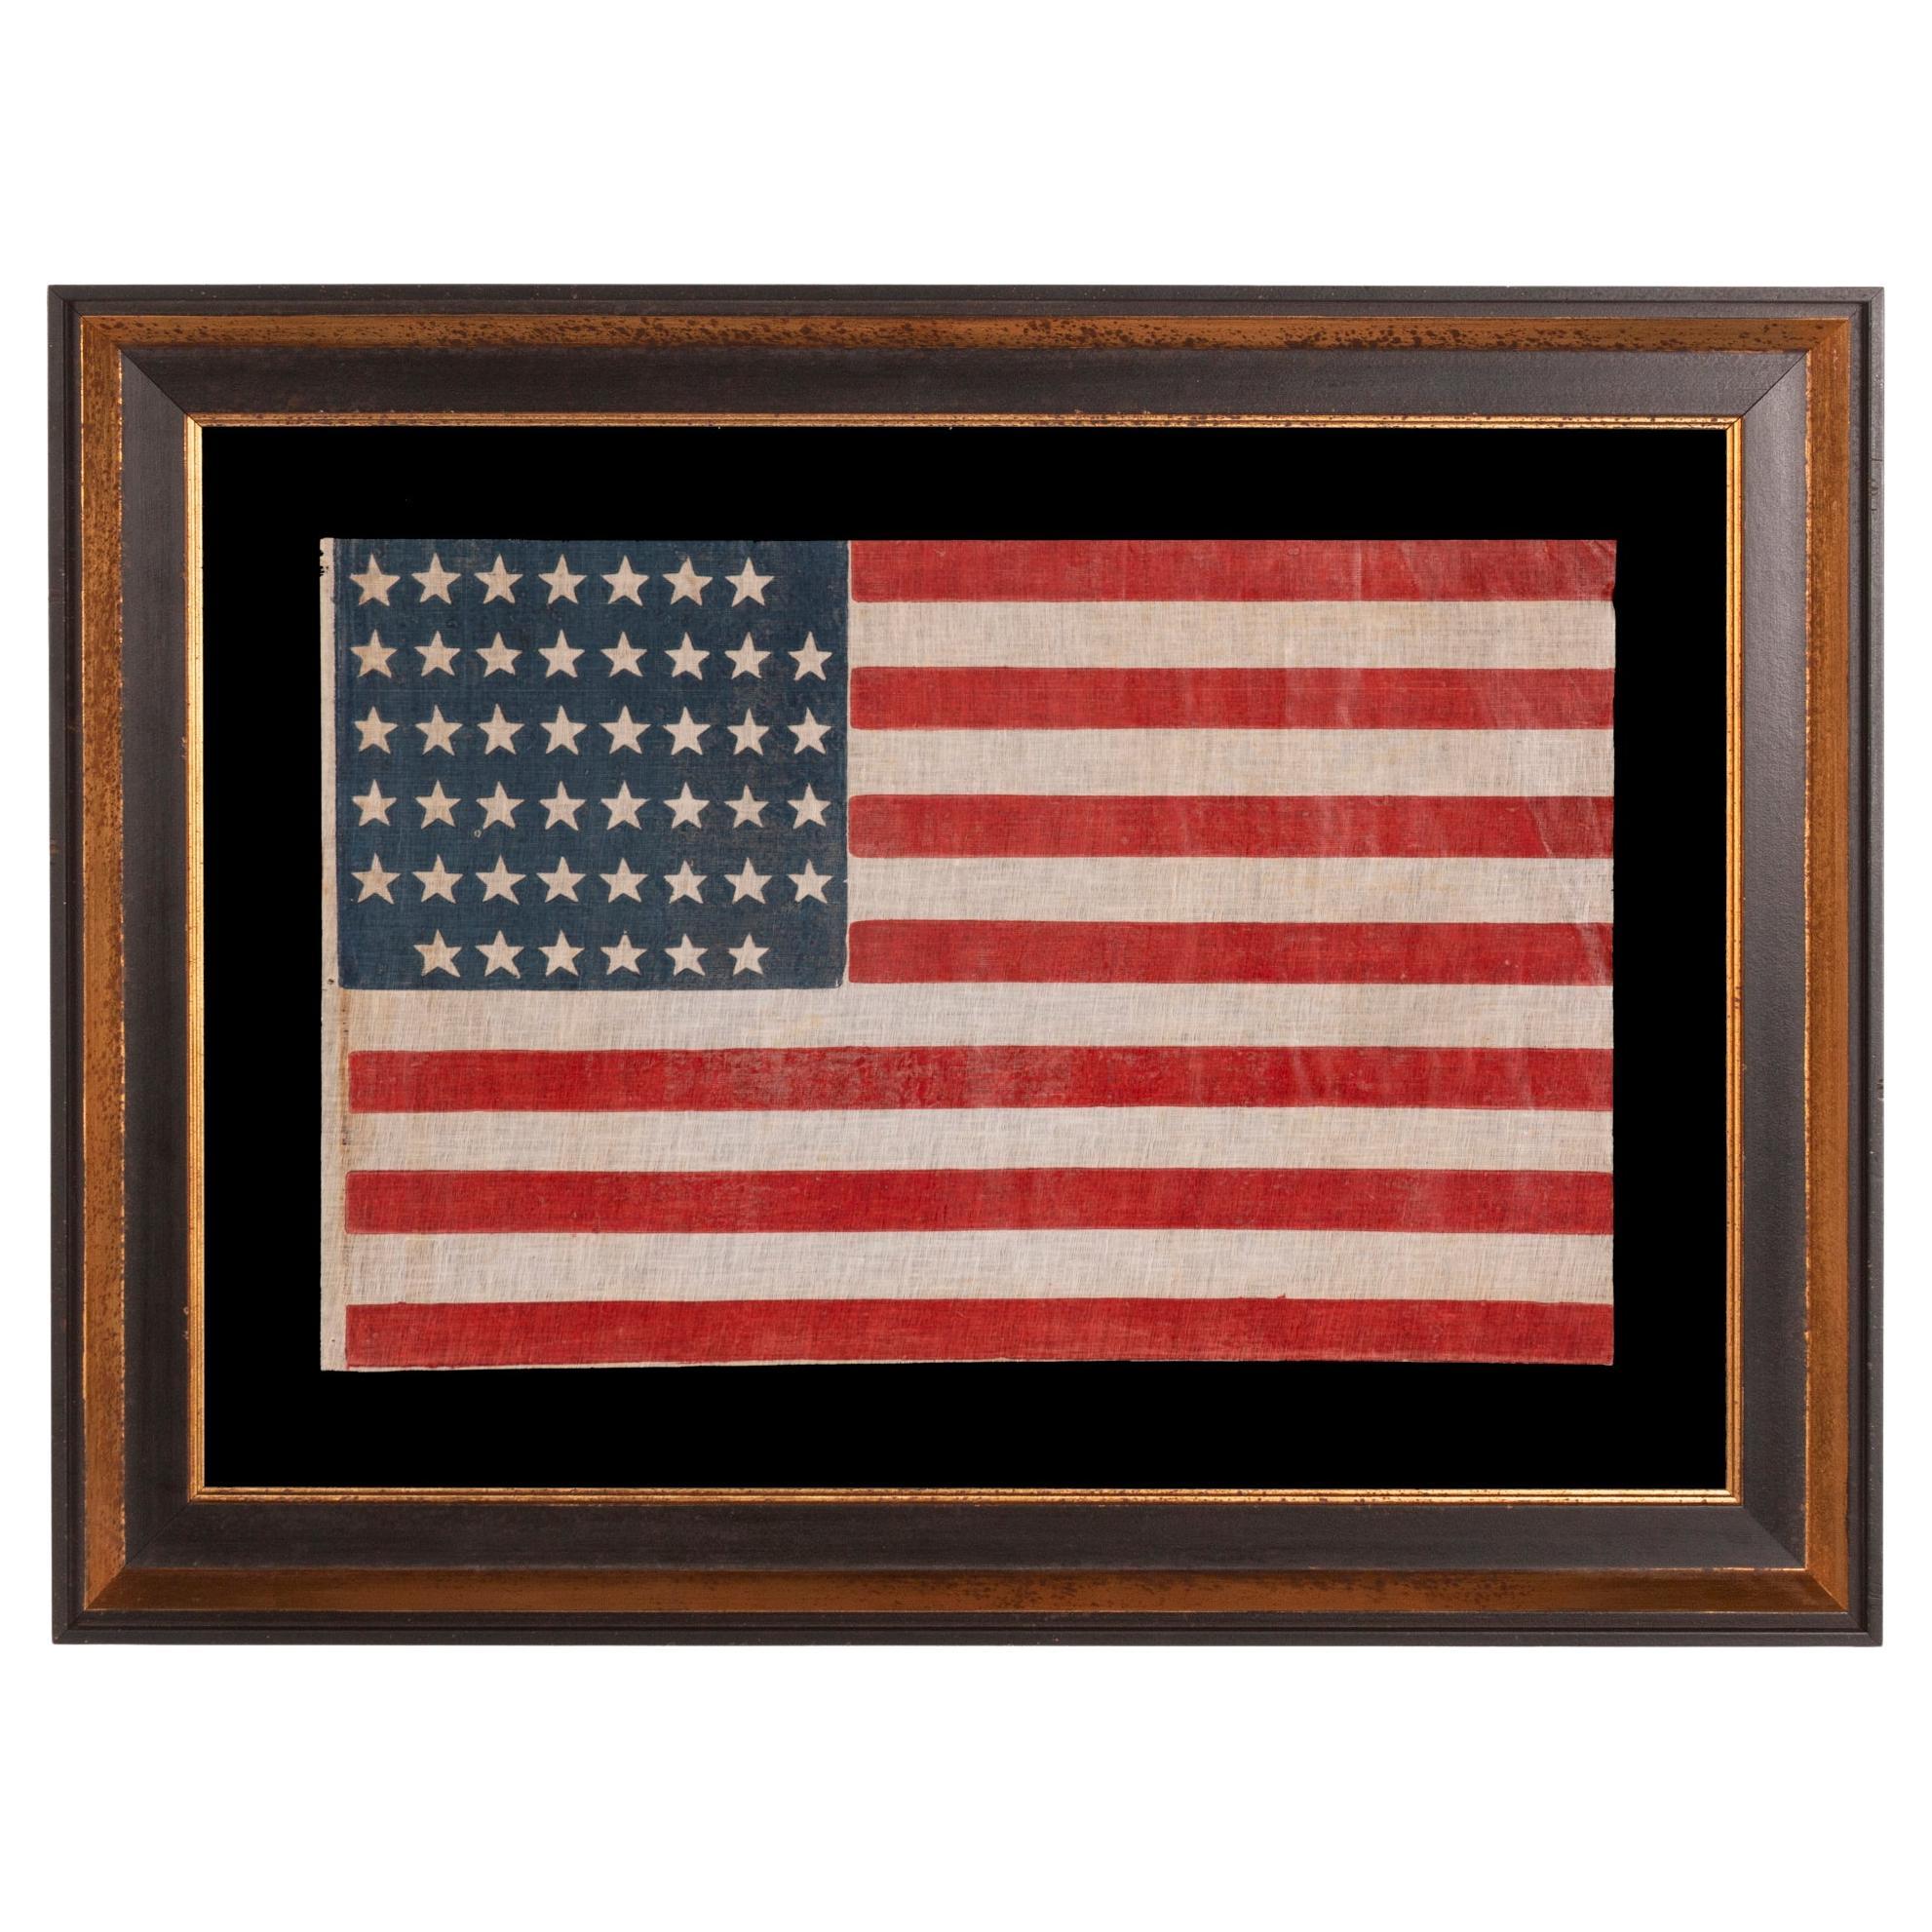 45 Star Antique American Flag, Utah Statehood, Ca 1896-1908 For Sale